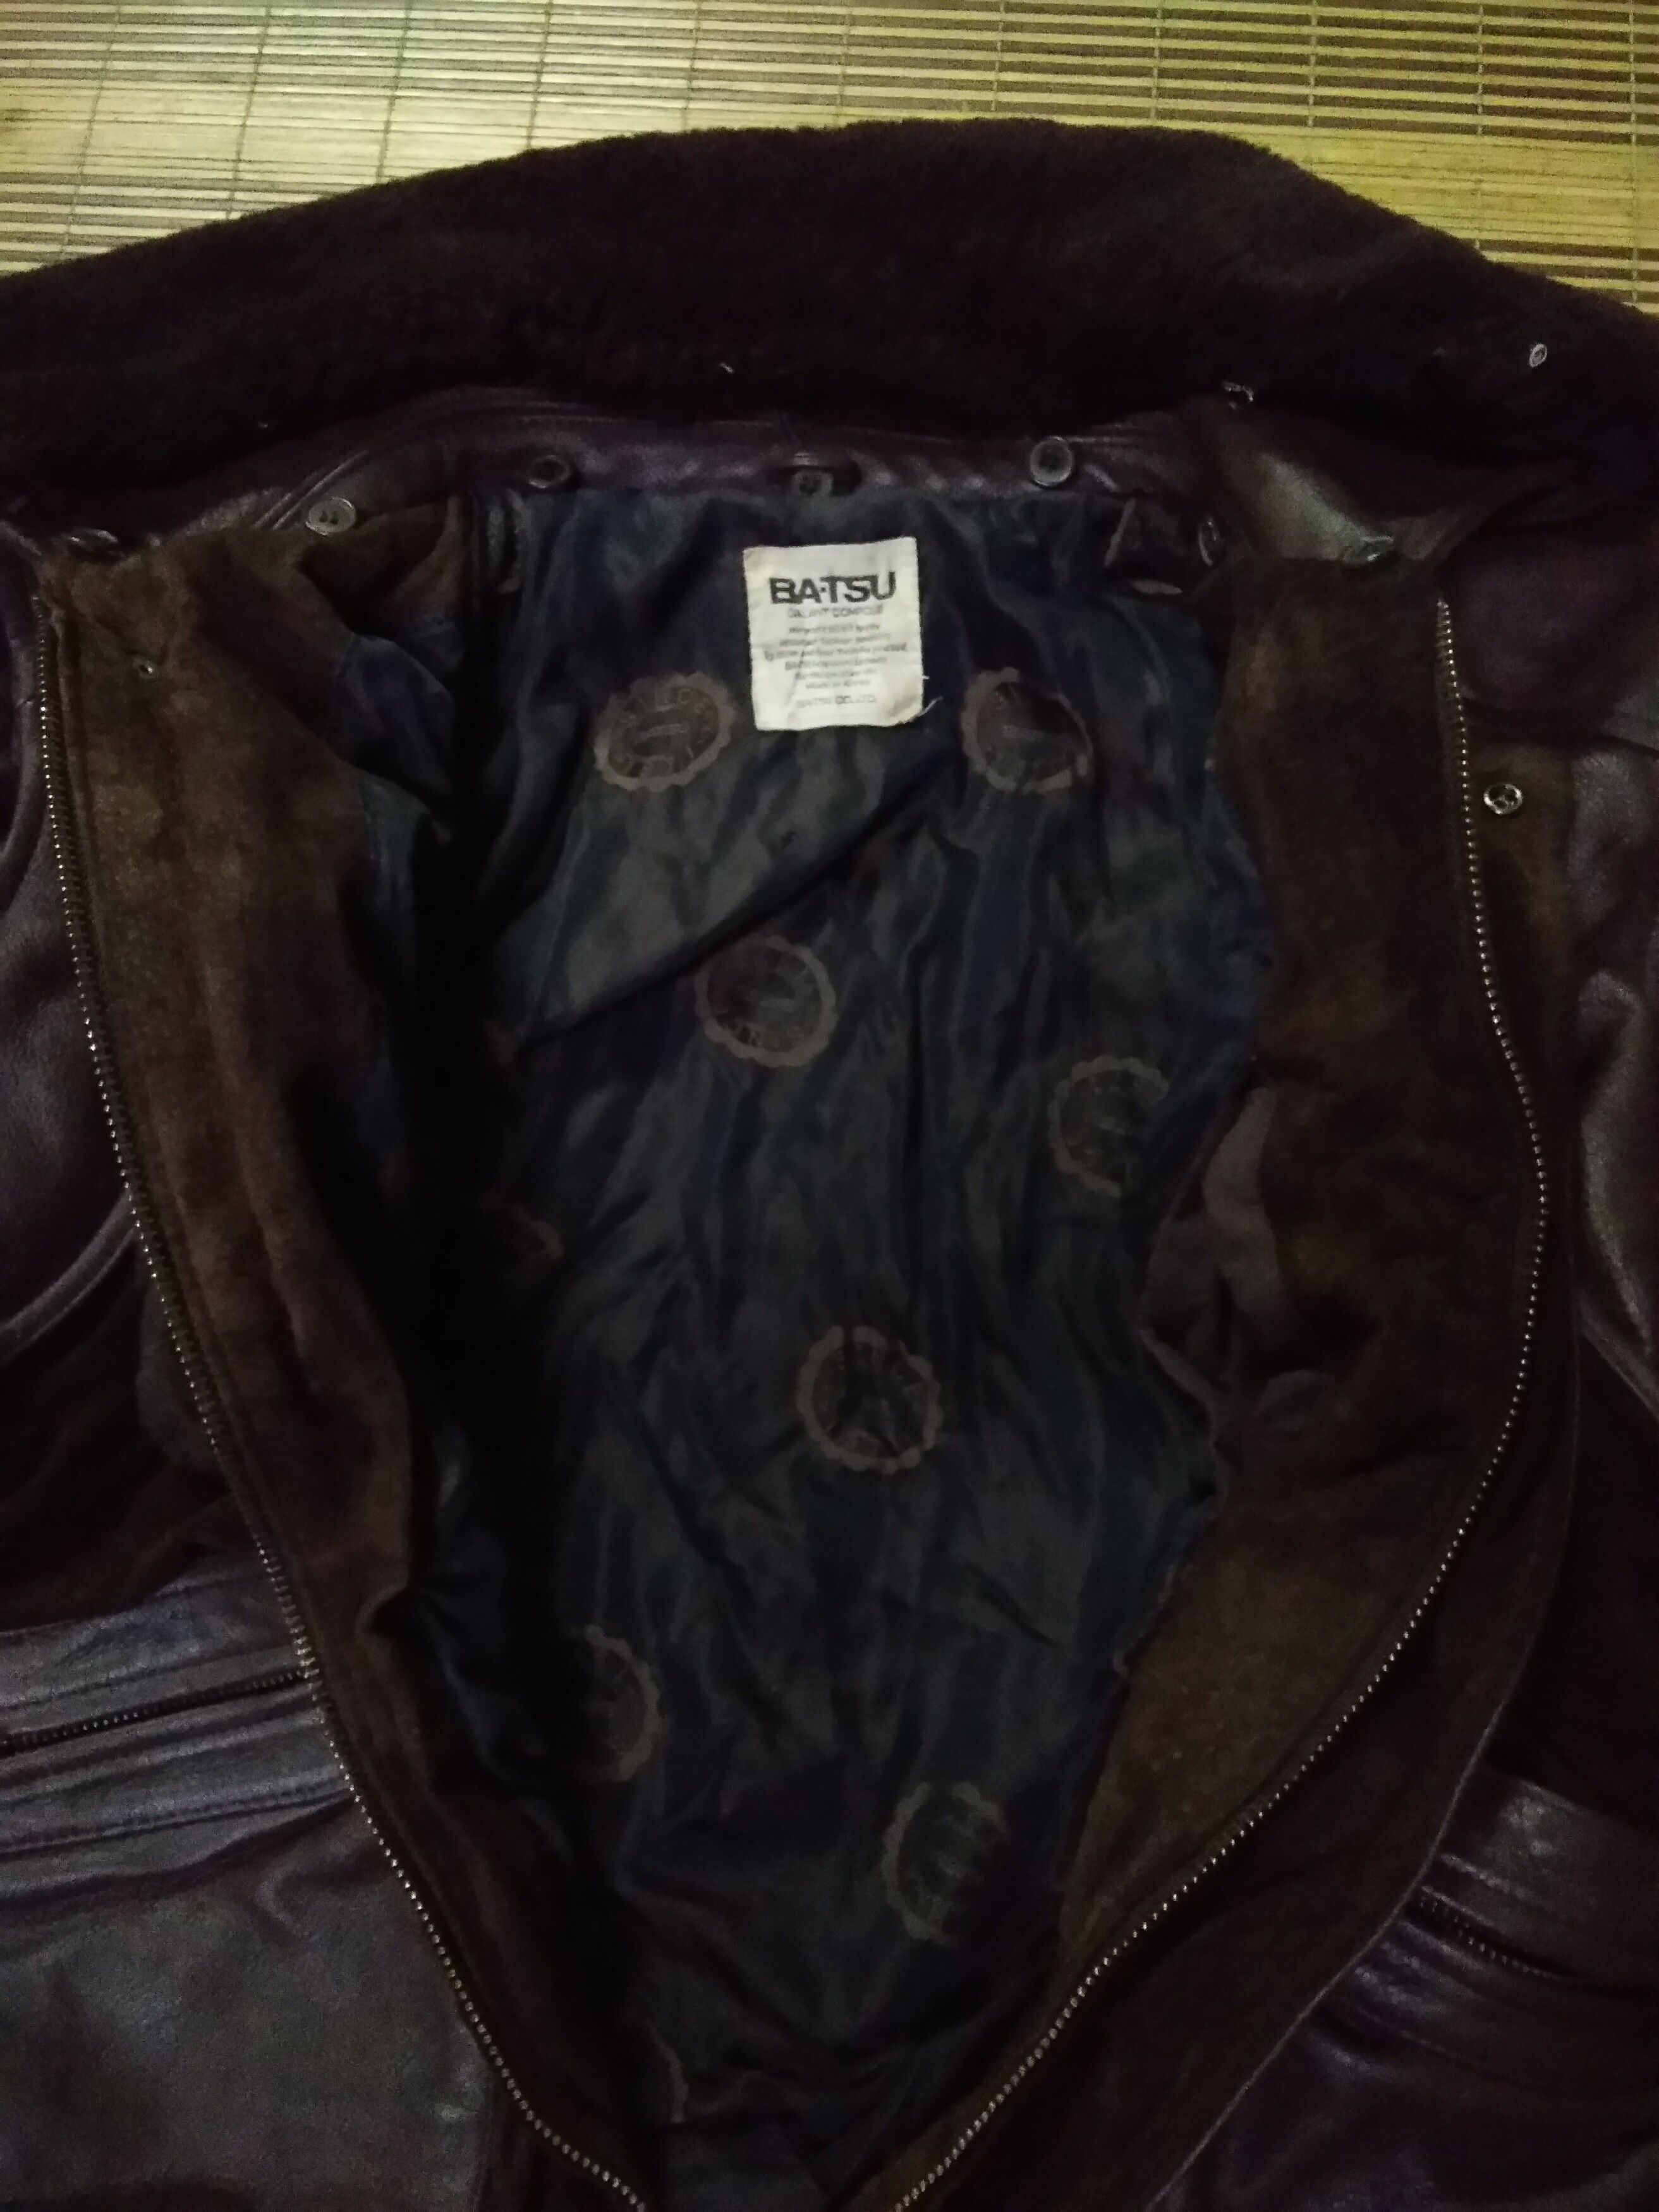 Japanese Brand Vintage Japanese Brand BA-TSU Leather Jacket Size US L / EU 52-54 / 3 - 5 Thumbnail